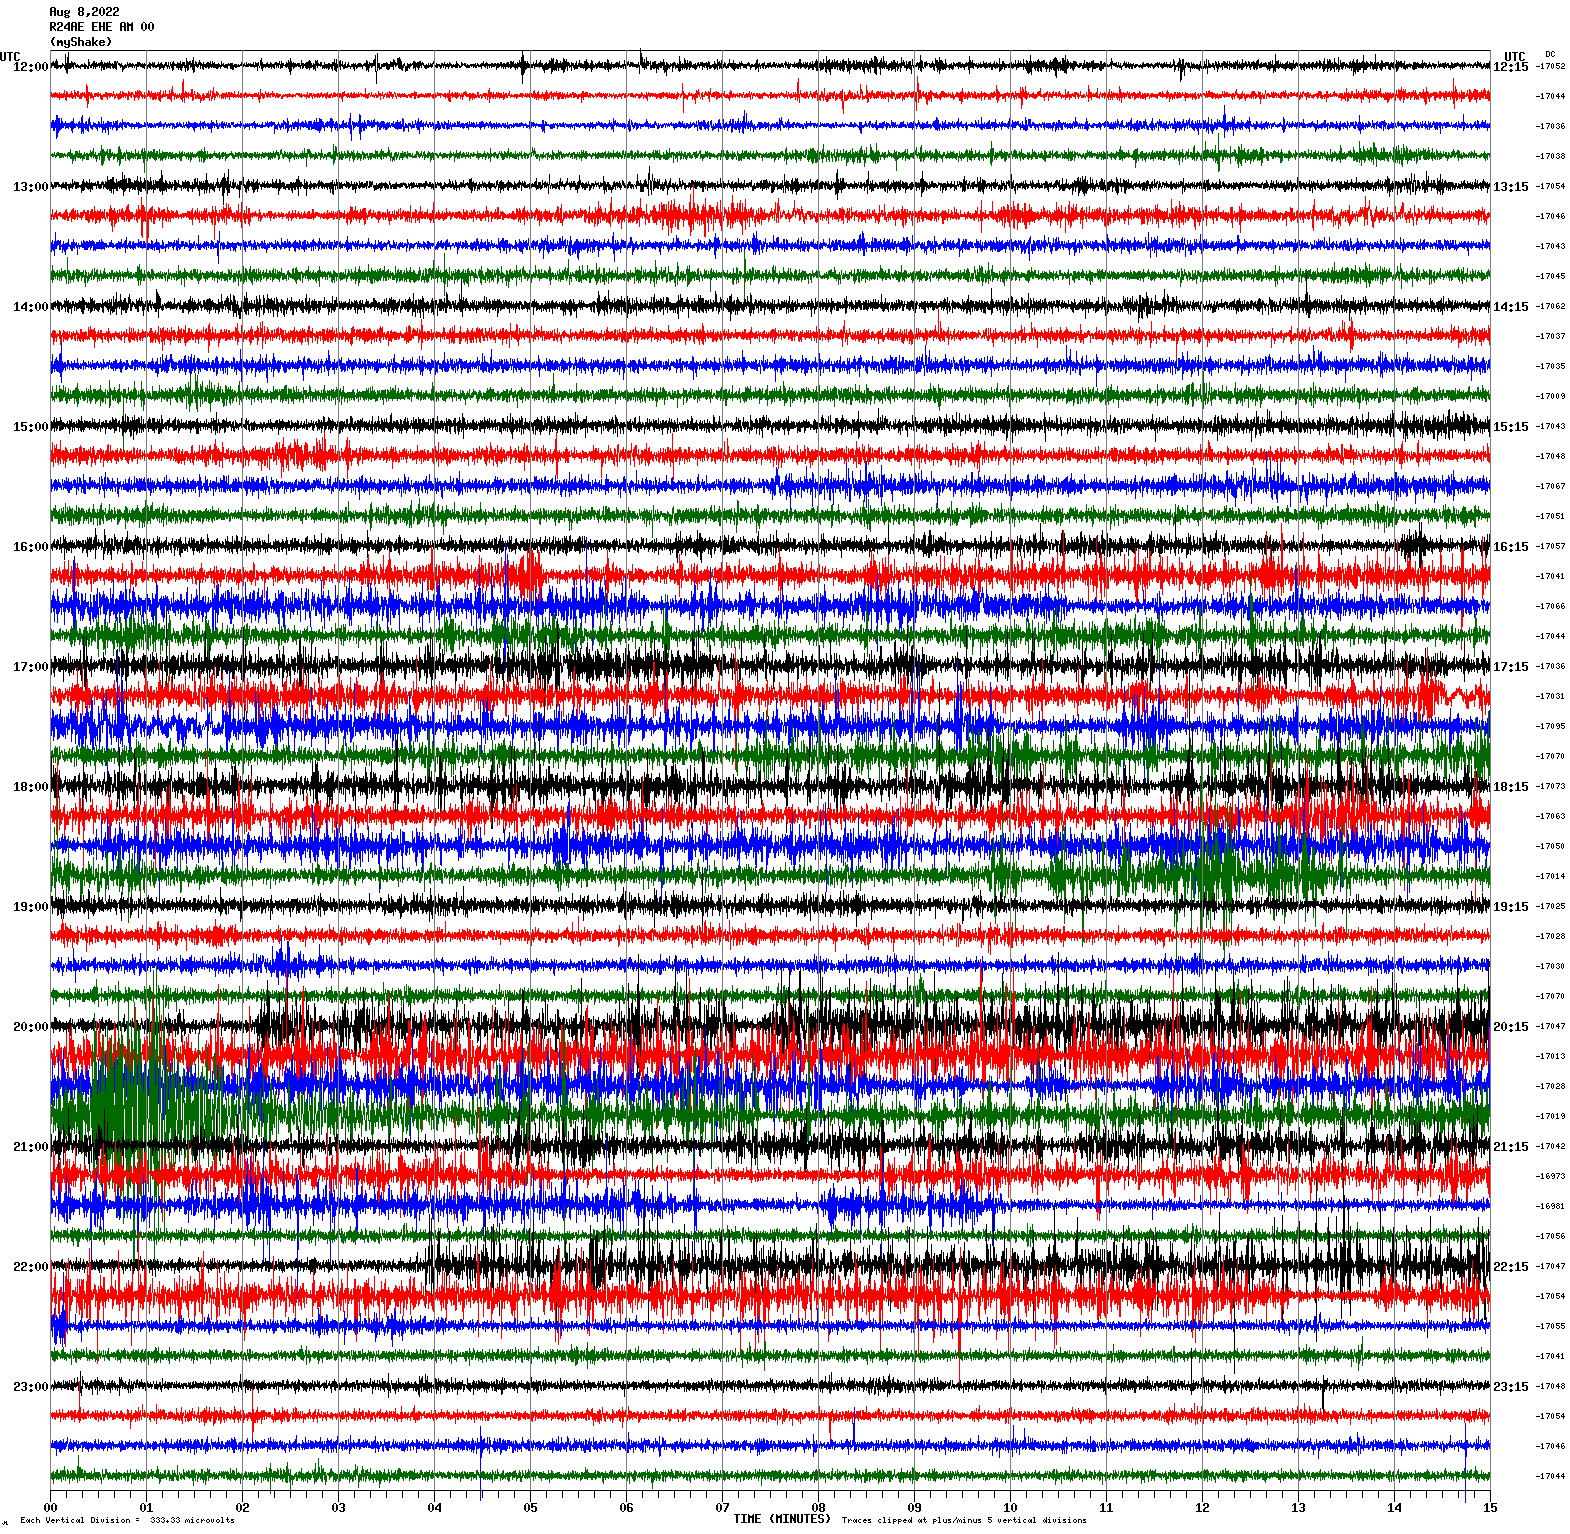 /seismic-data/R24AE/R24AE_EHE_AM_00.2022080812.gif